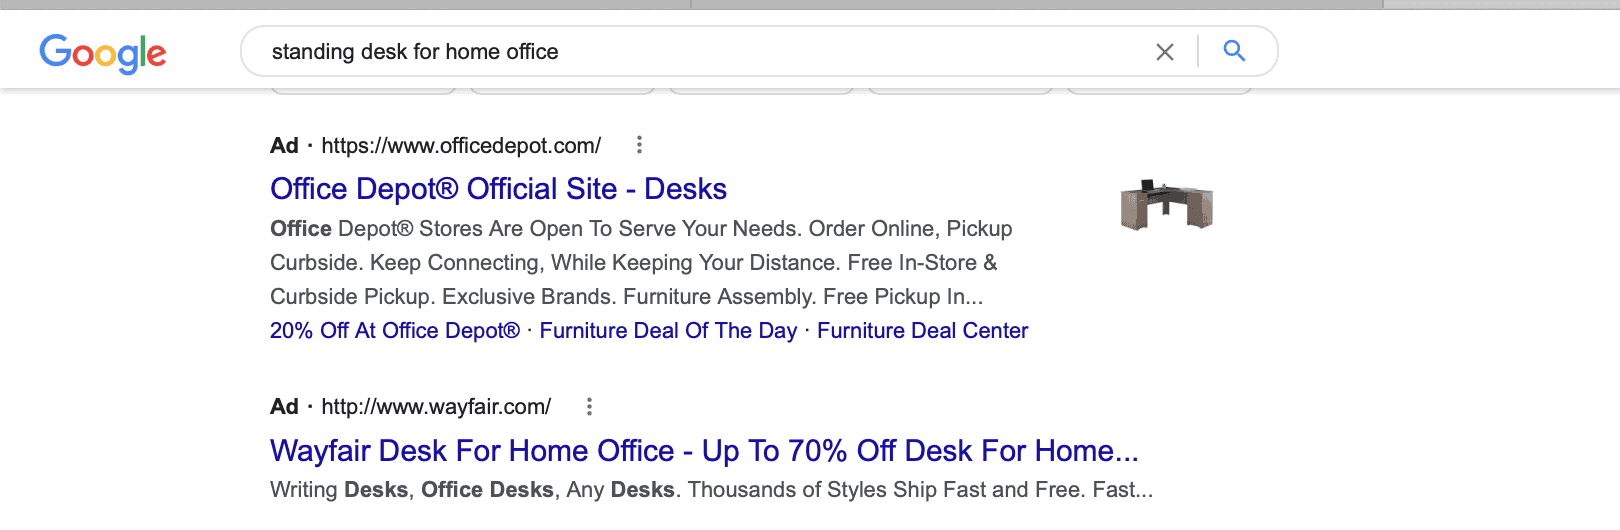 google ads for standing desks for home office